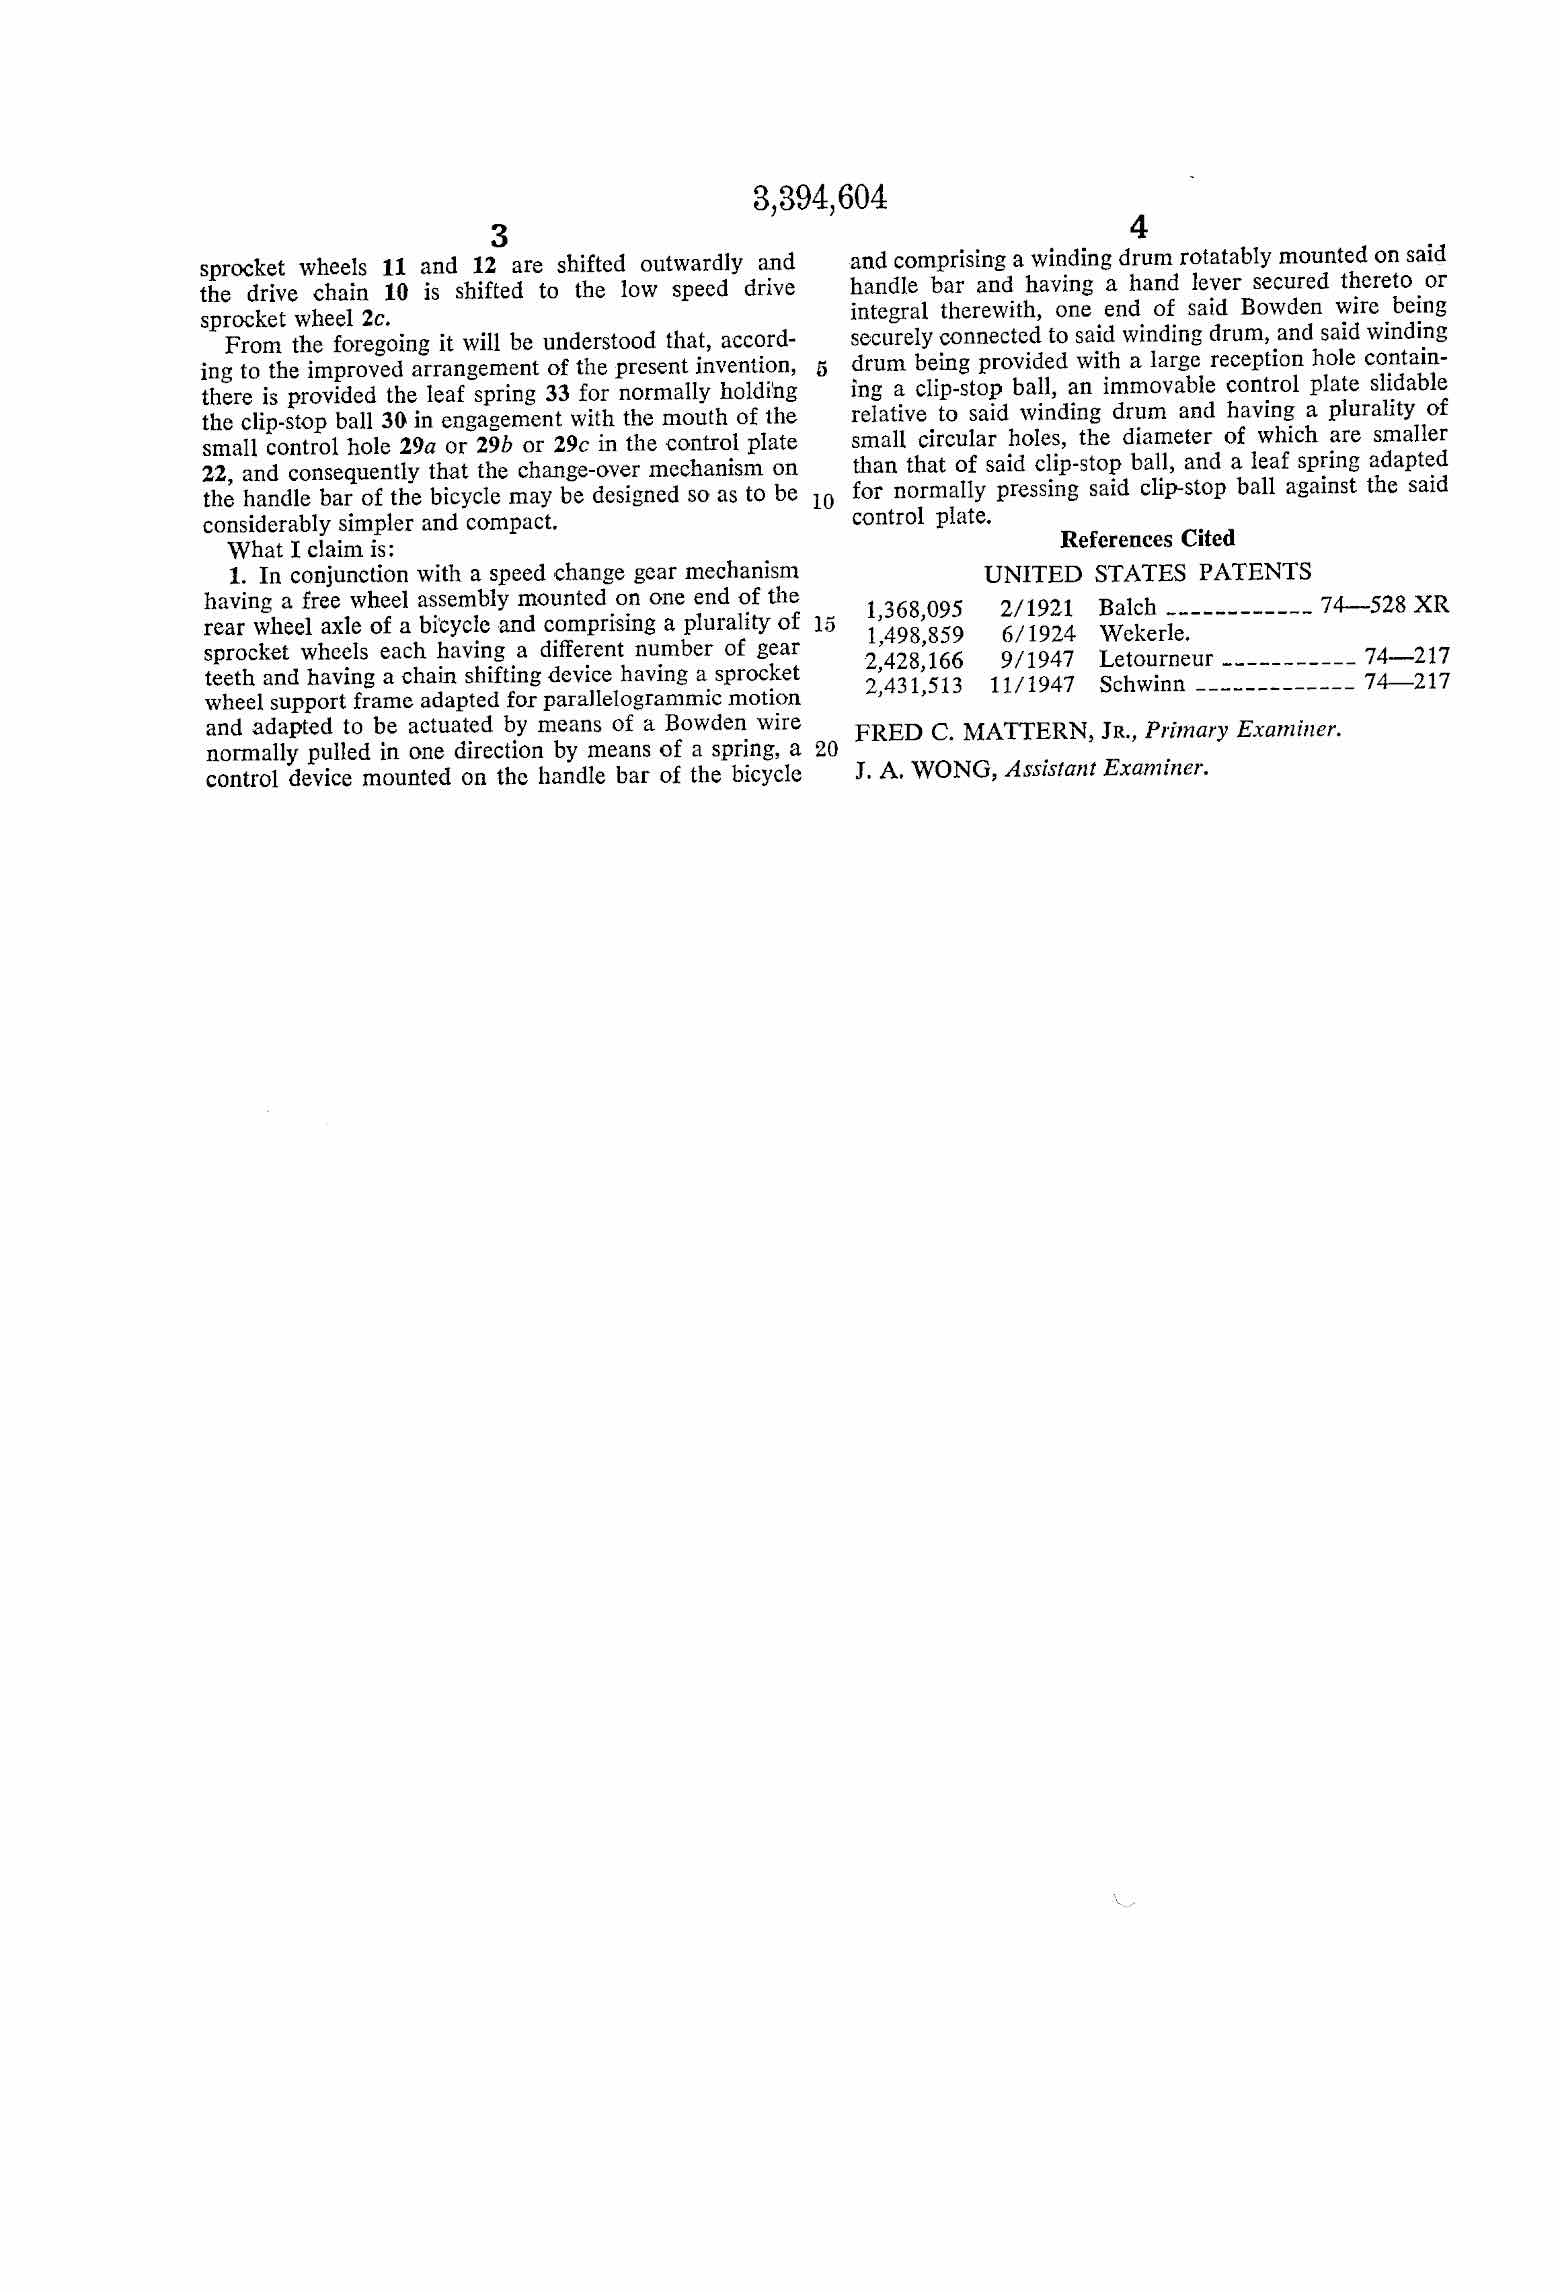 US Patent 3,394,604 - Shimano Archery scan 2 main image